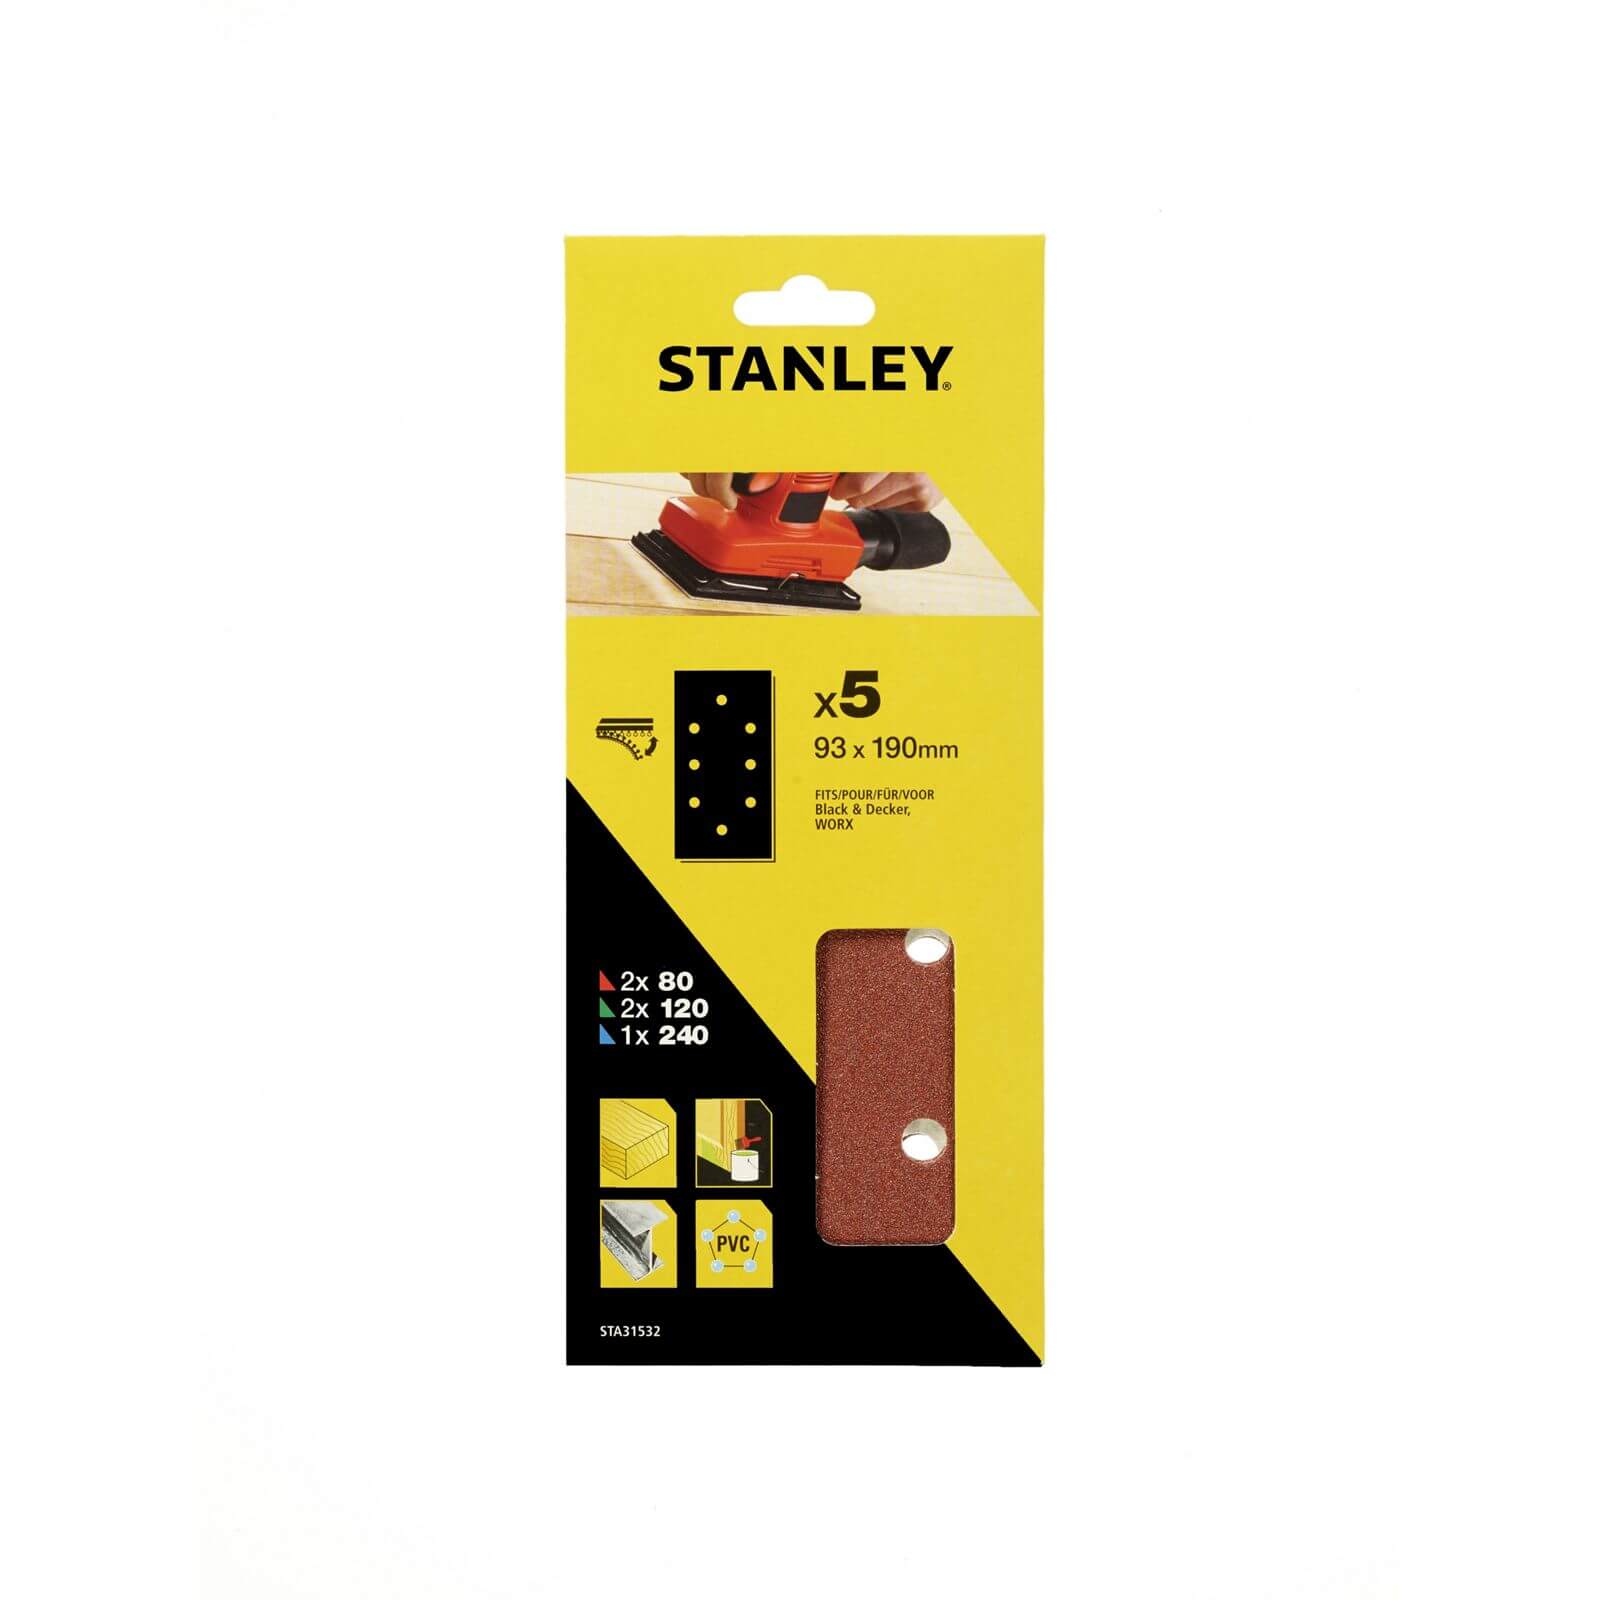 Photo of Stanley 1/3 Sheet Sander Mixed Hook & Loop Sanding Sheets - Sta31532-xj